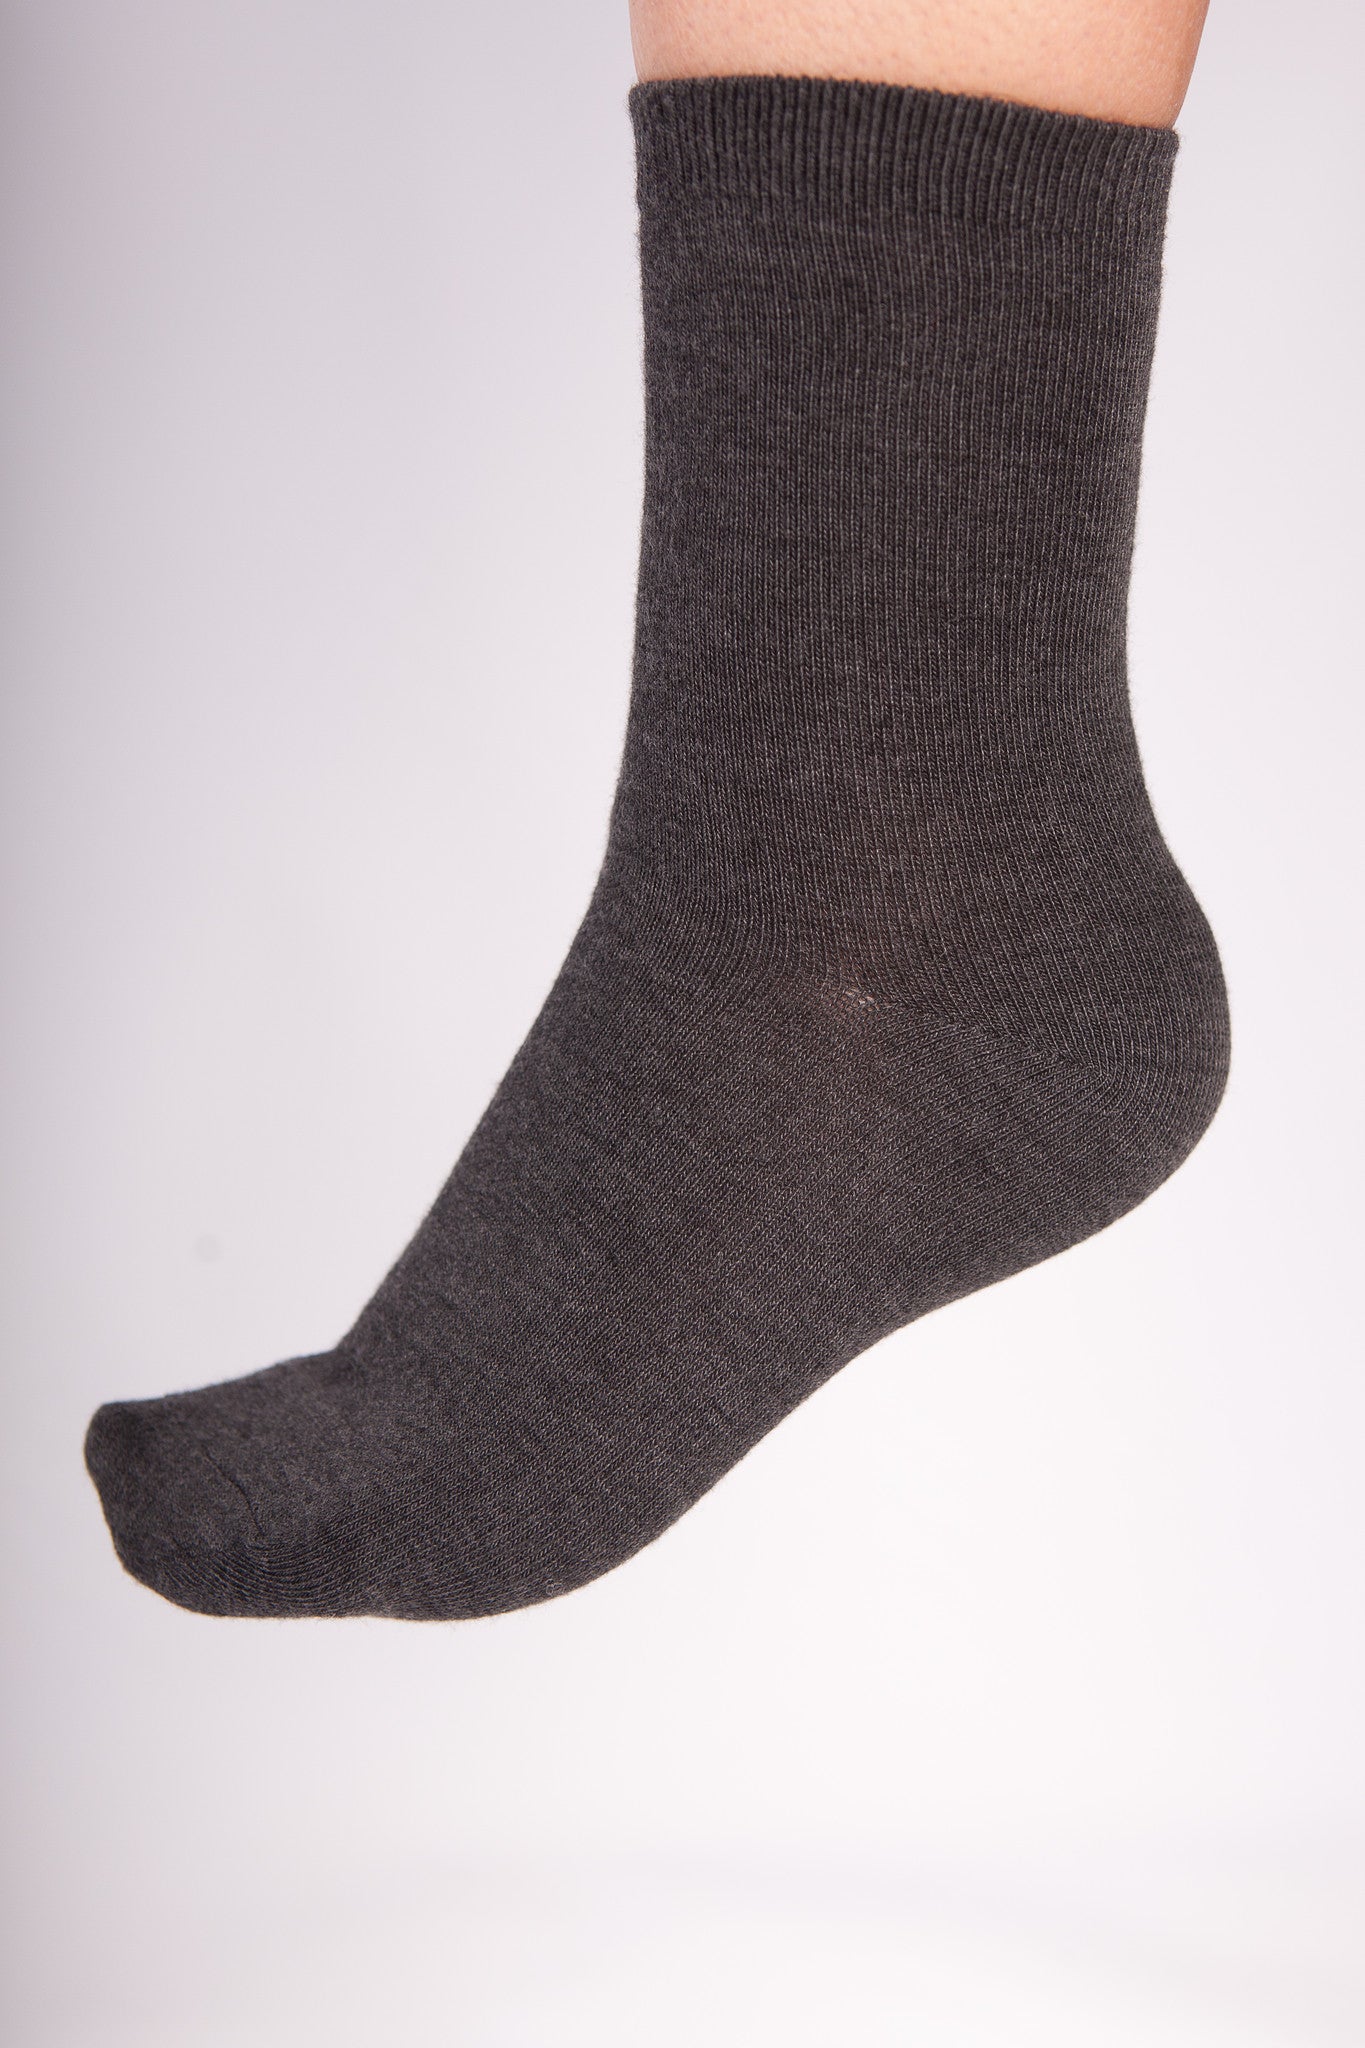 Incrediwear Women's Dress Socks by Incrediwear - Ebambu.ca natural health product store - free shipping <59$ 